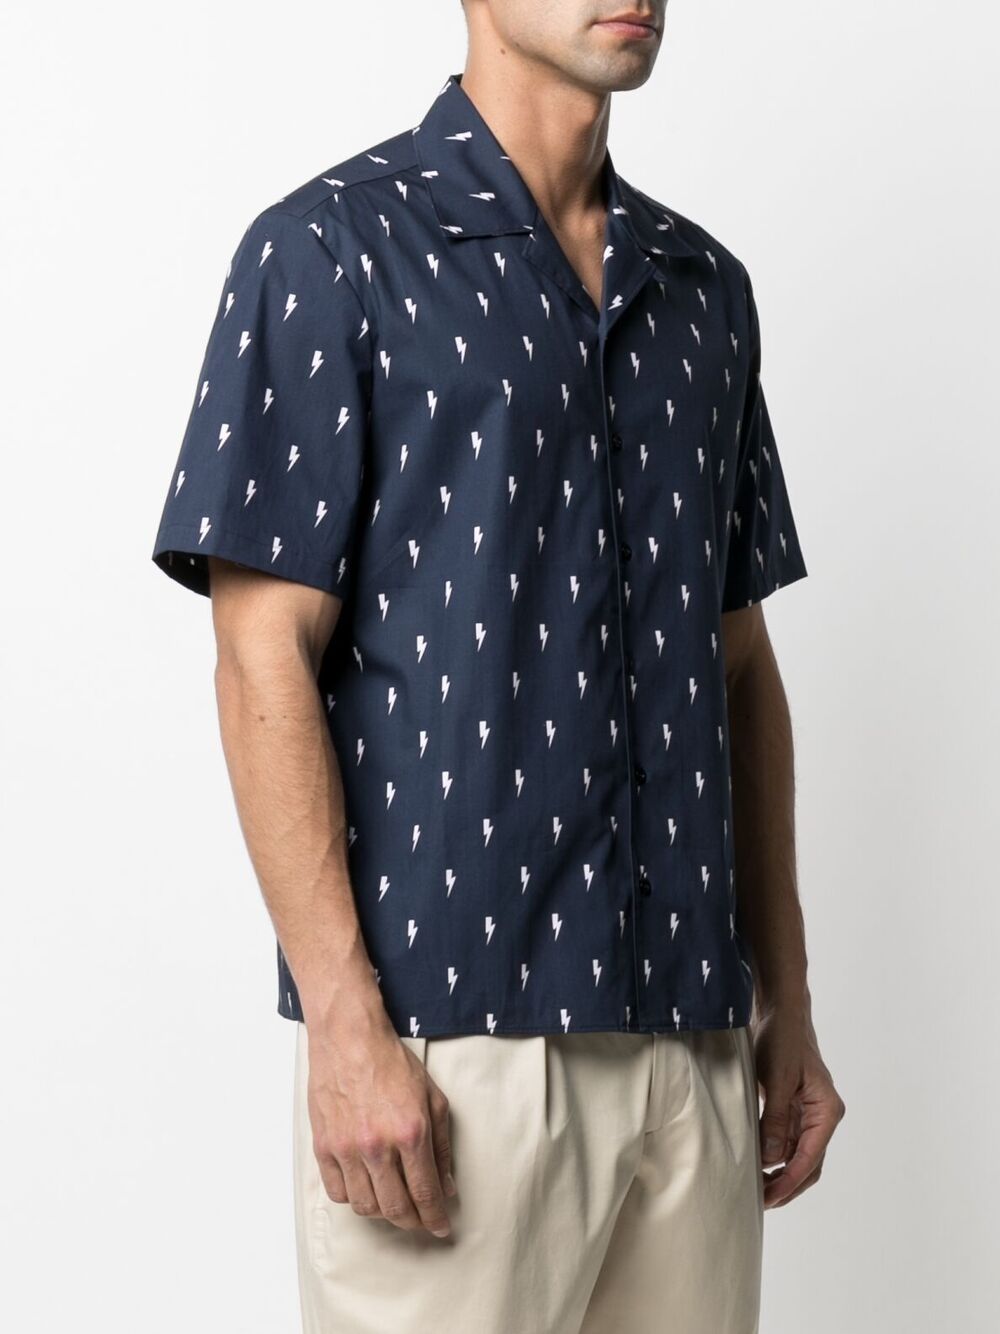 фото Neil barrett рубашка с принтом thunderbolt